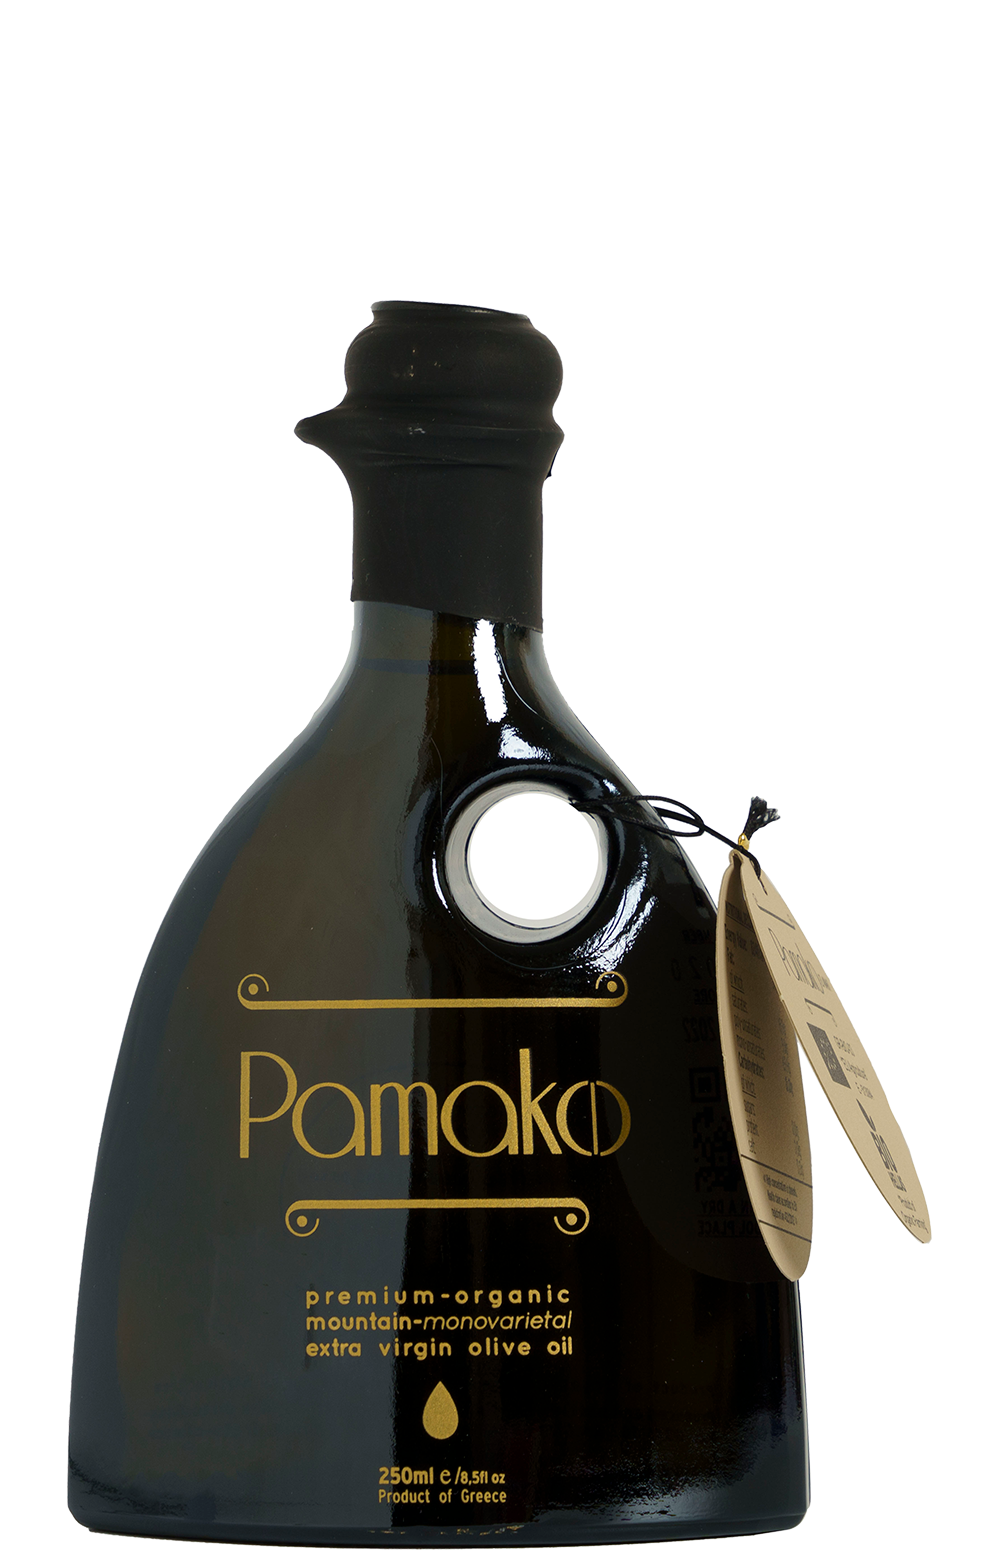 Pamako Premium Organic Mountain Monovarietal